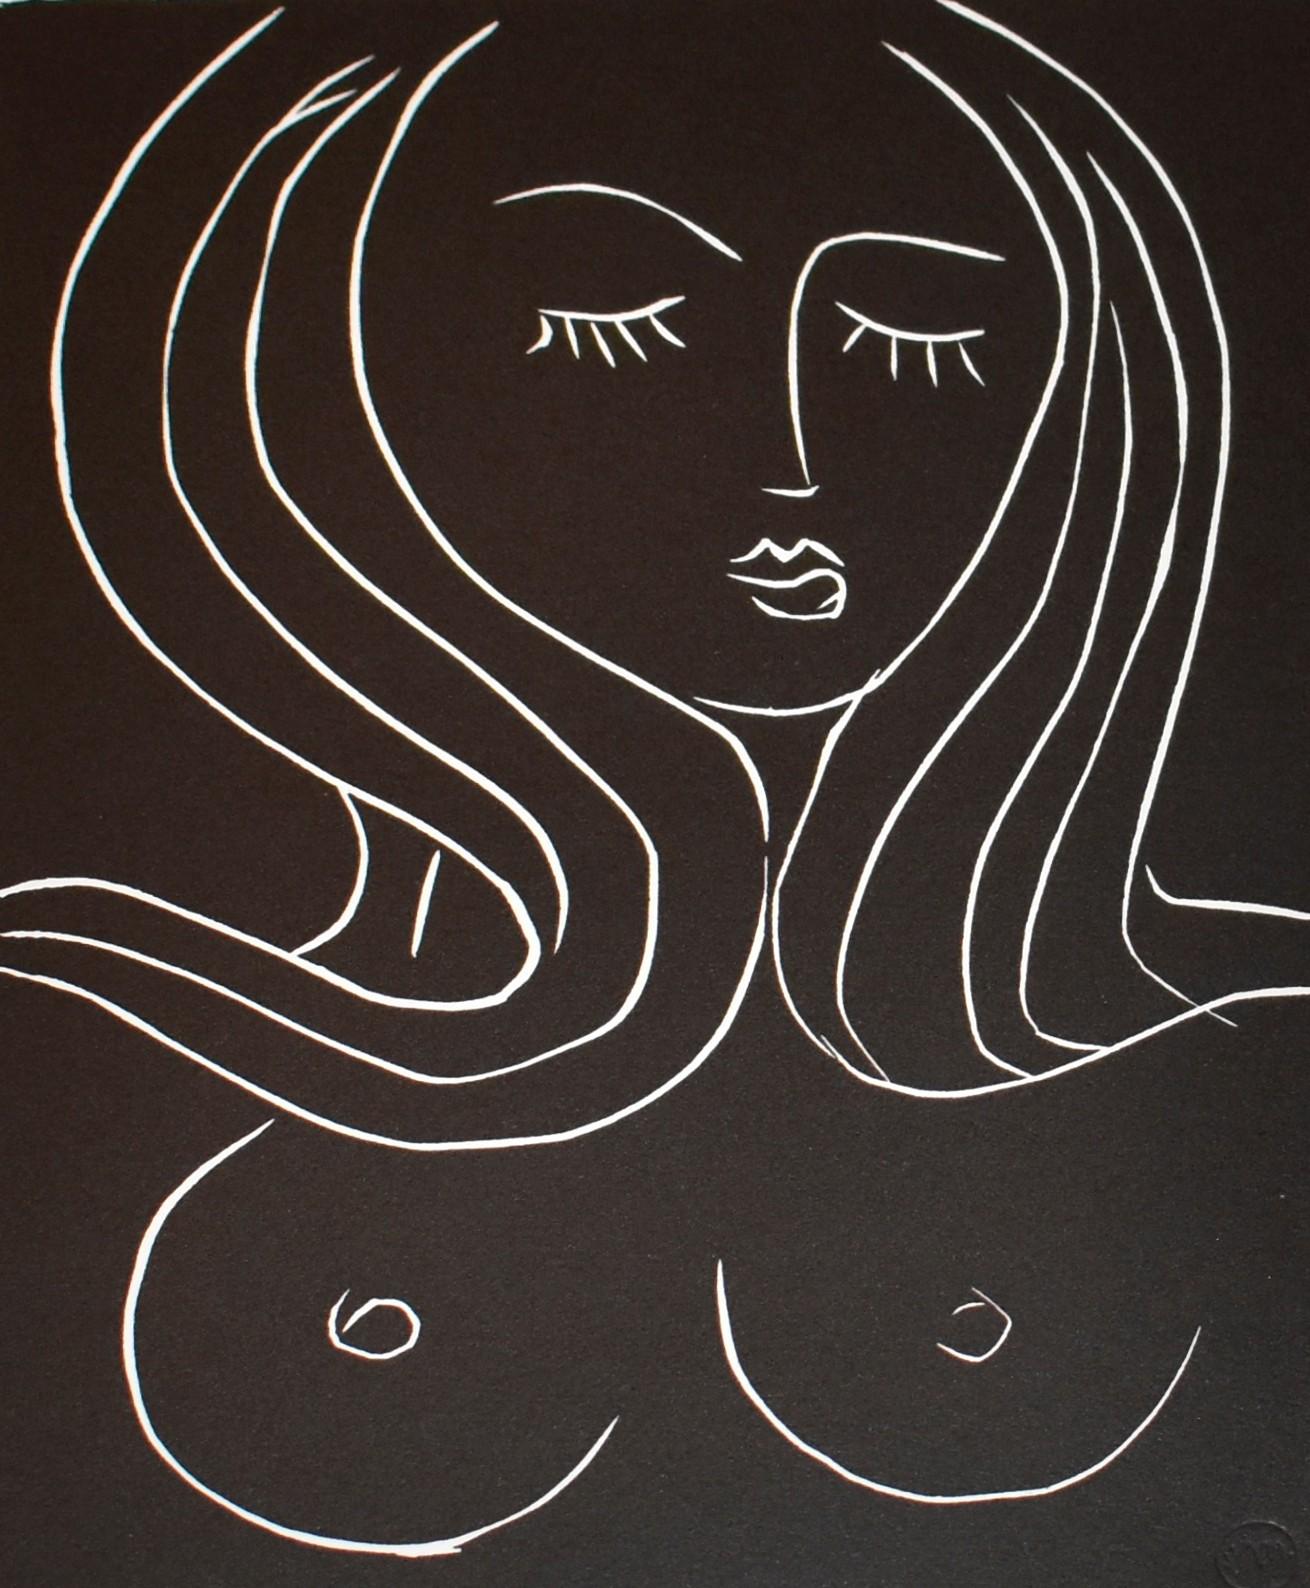 Pasiphae Plate 22 - Print by Henri Matisse